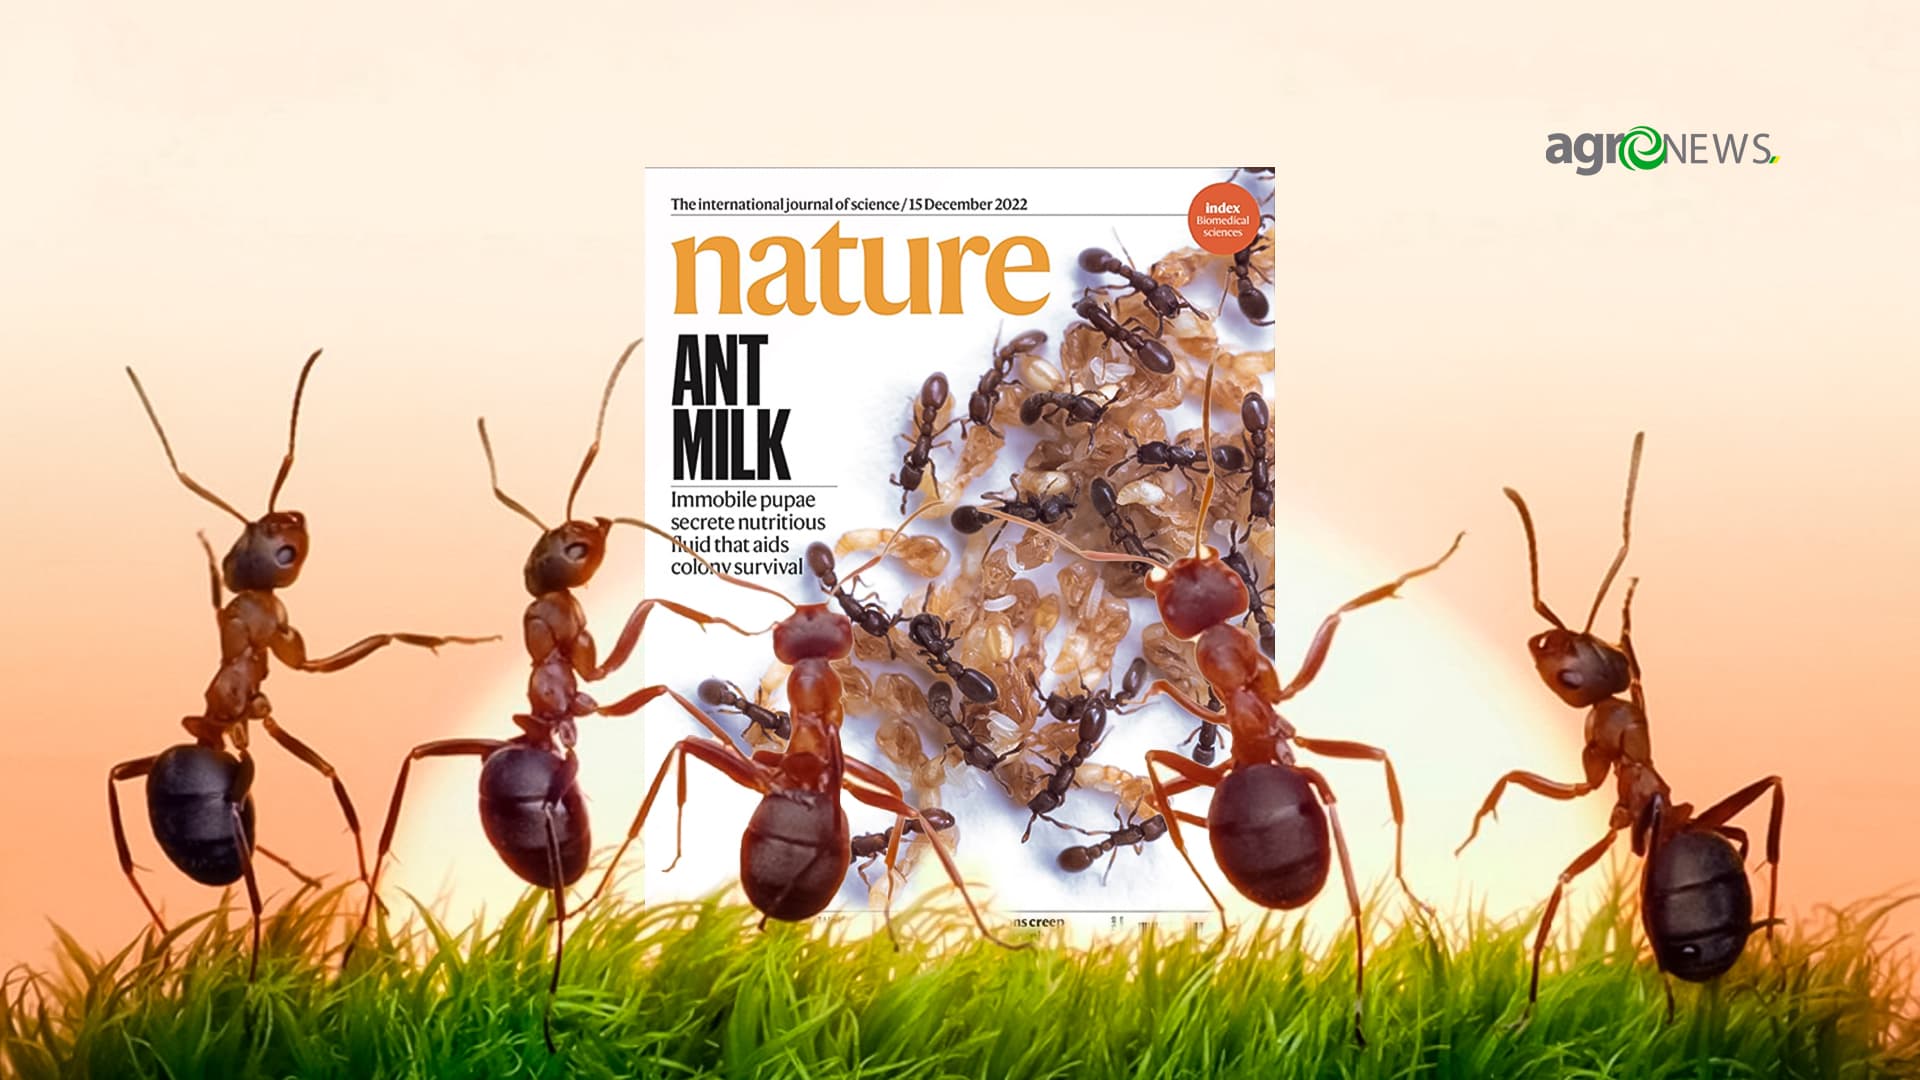 Leite de formiga a ciencia descobre algo incrivel